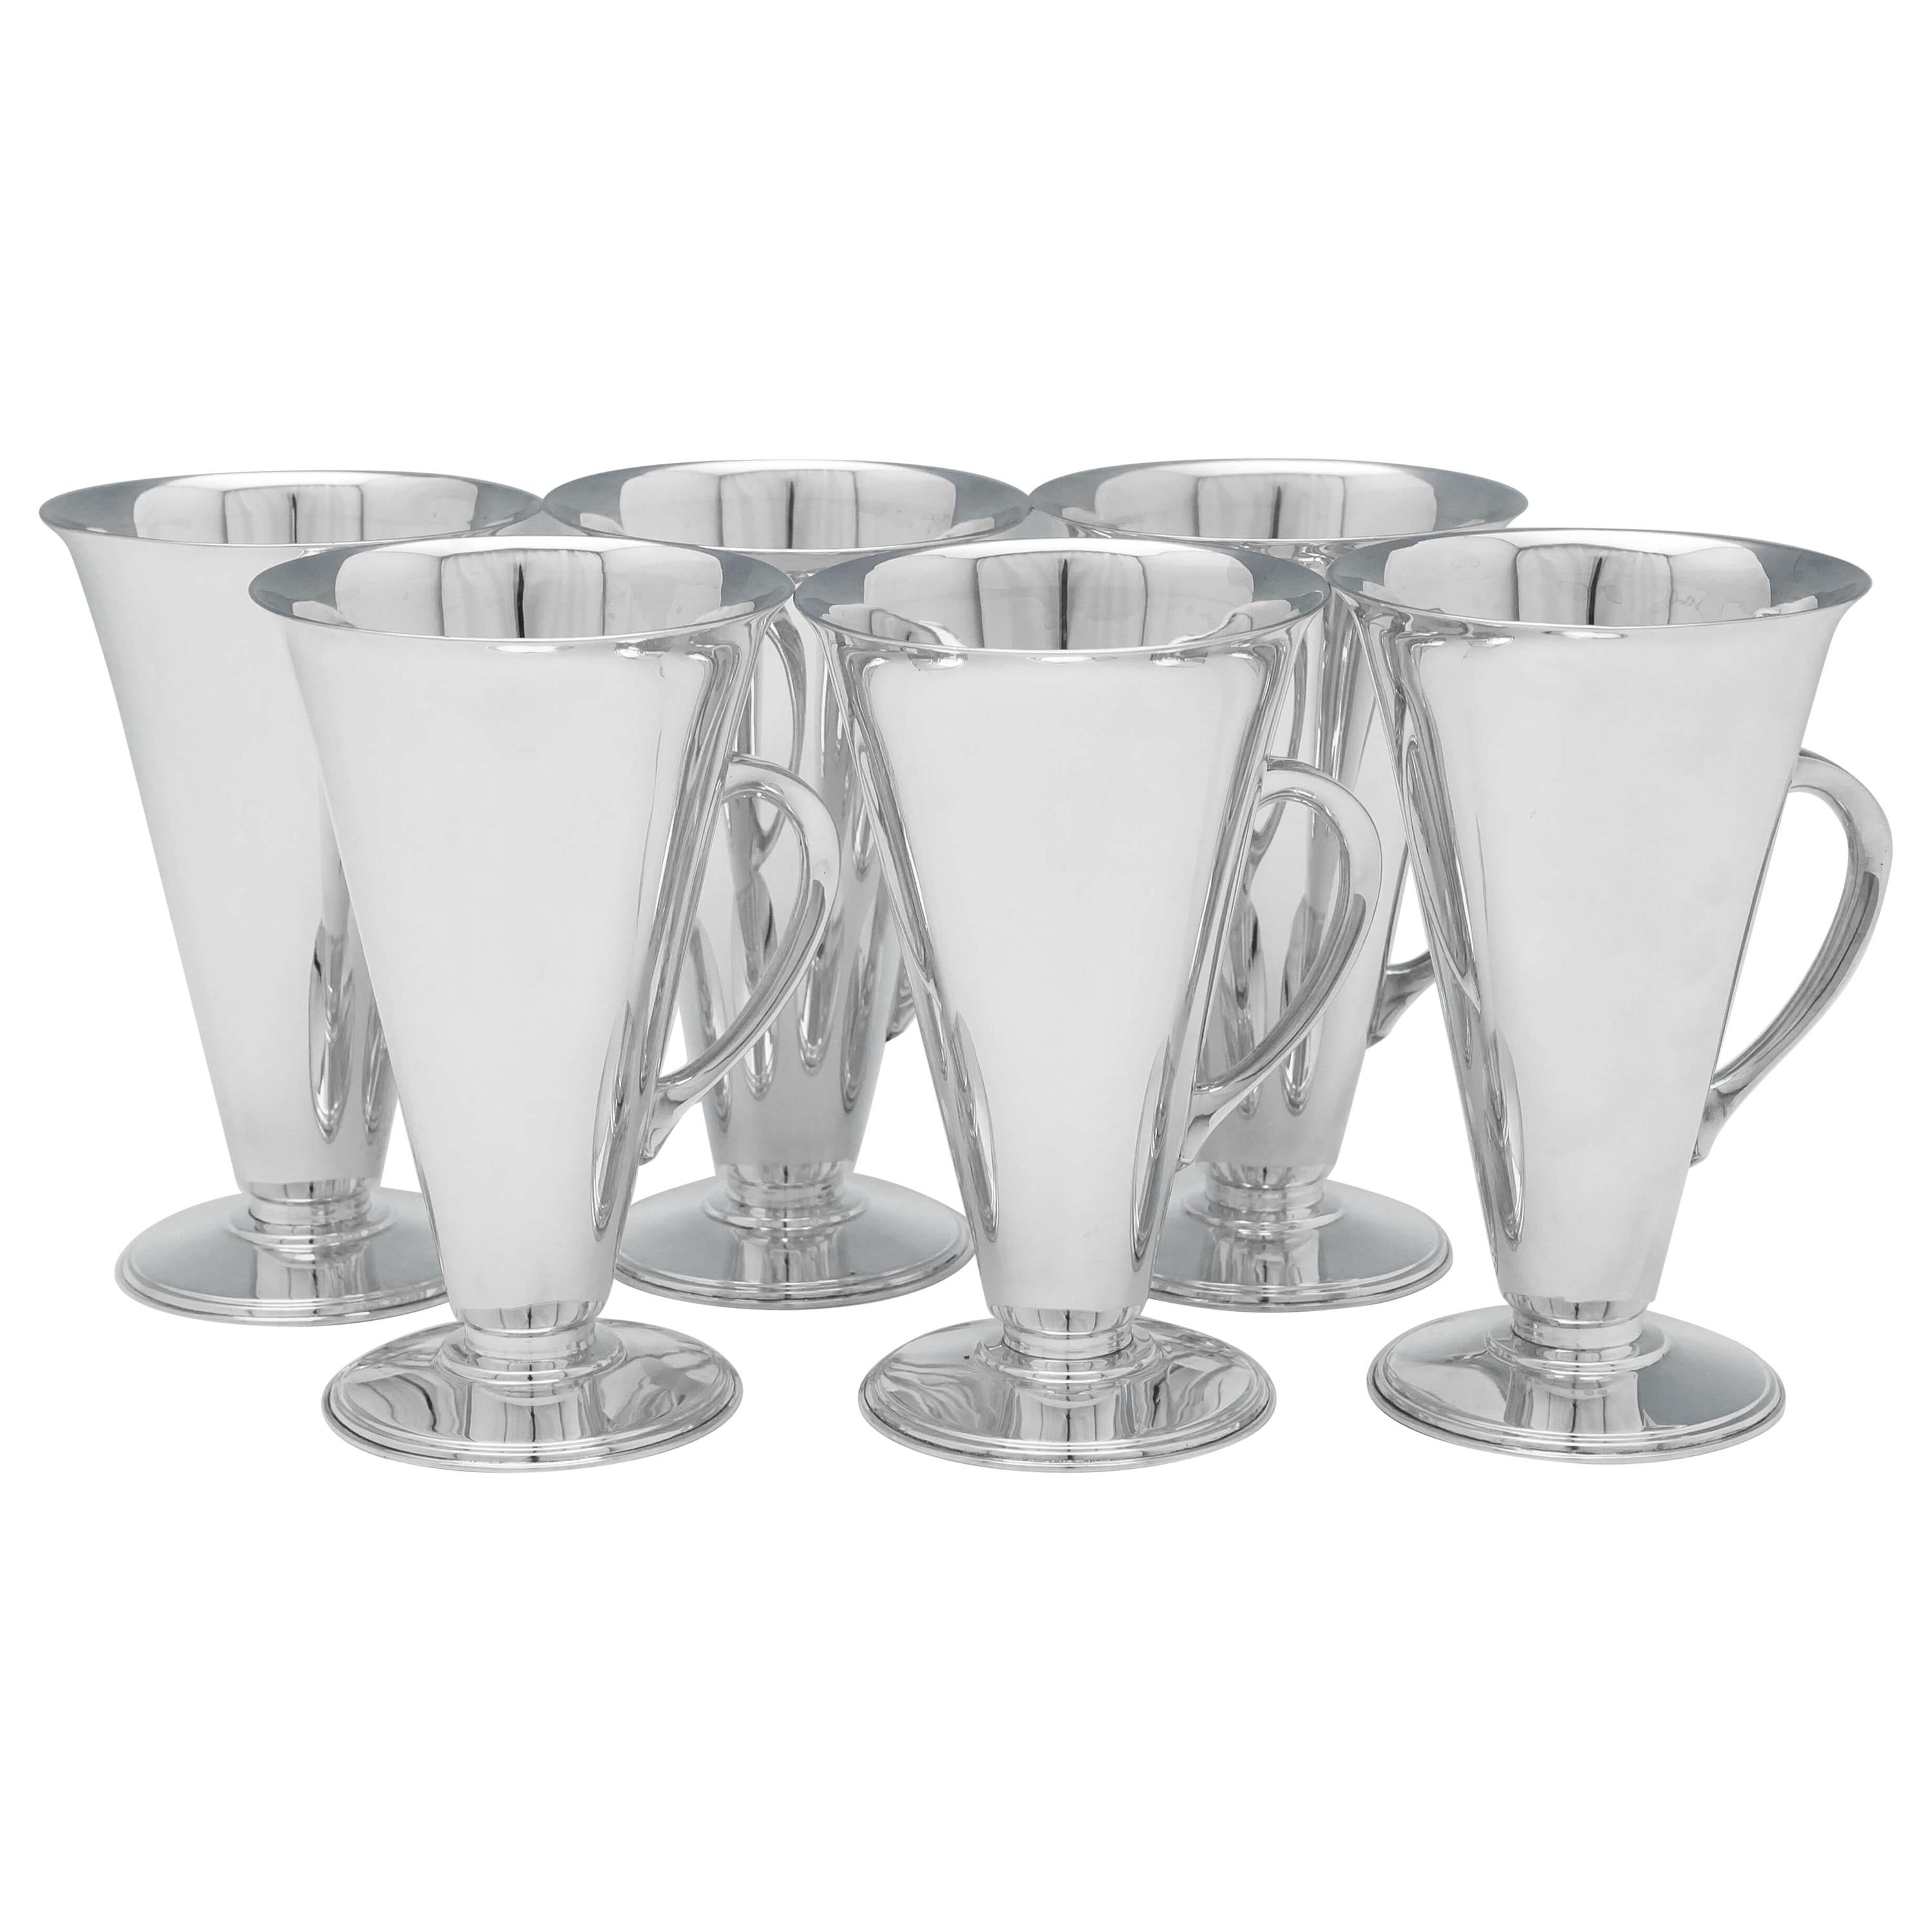 Art Deco Mint Julep Cups - Asprey 1936 - Set of 6 Sterling Silver Cups